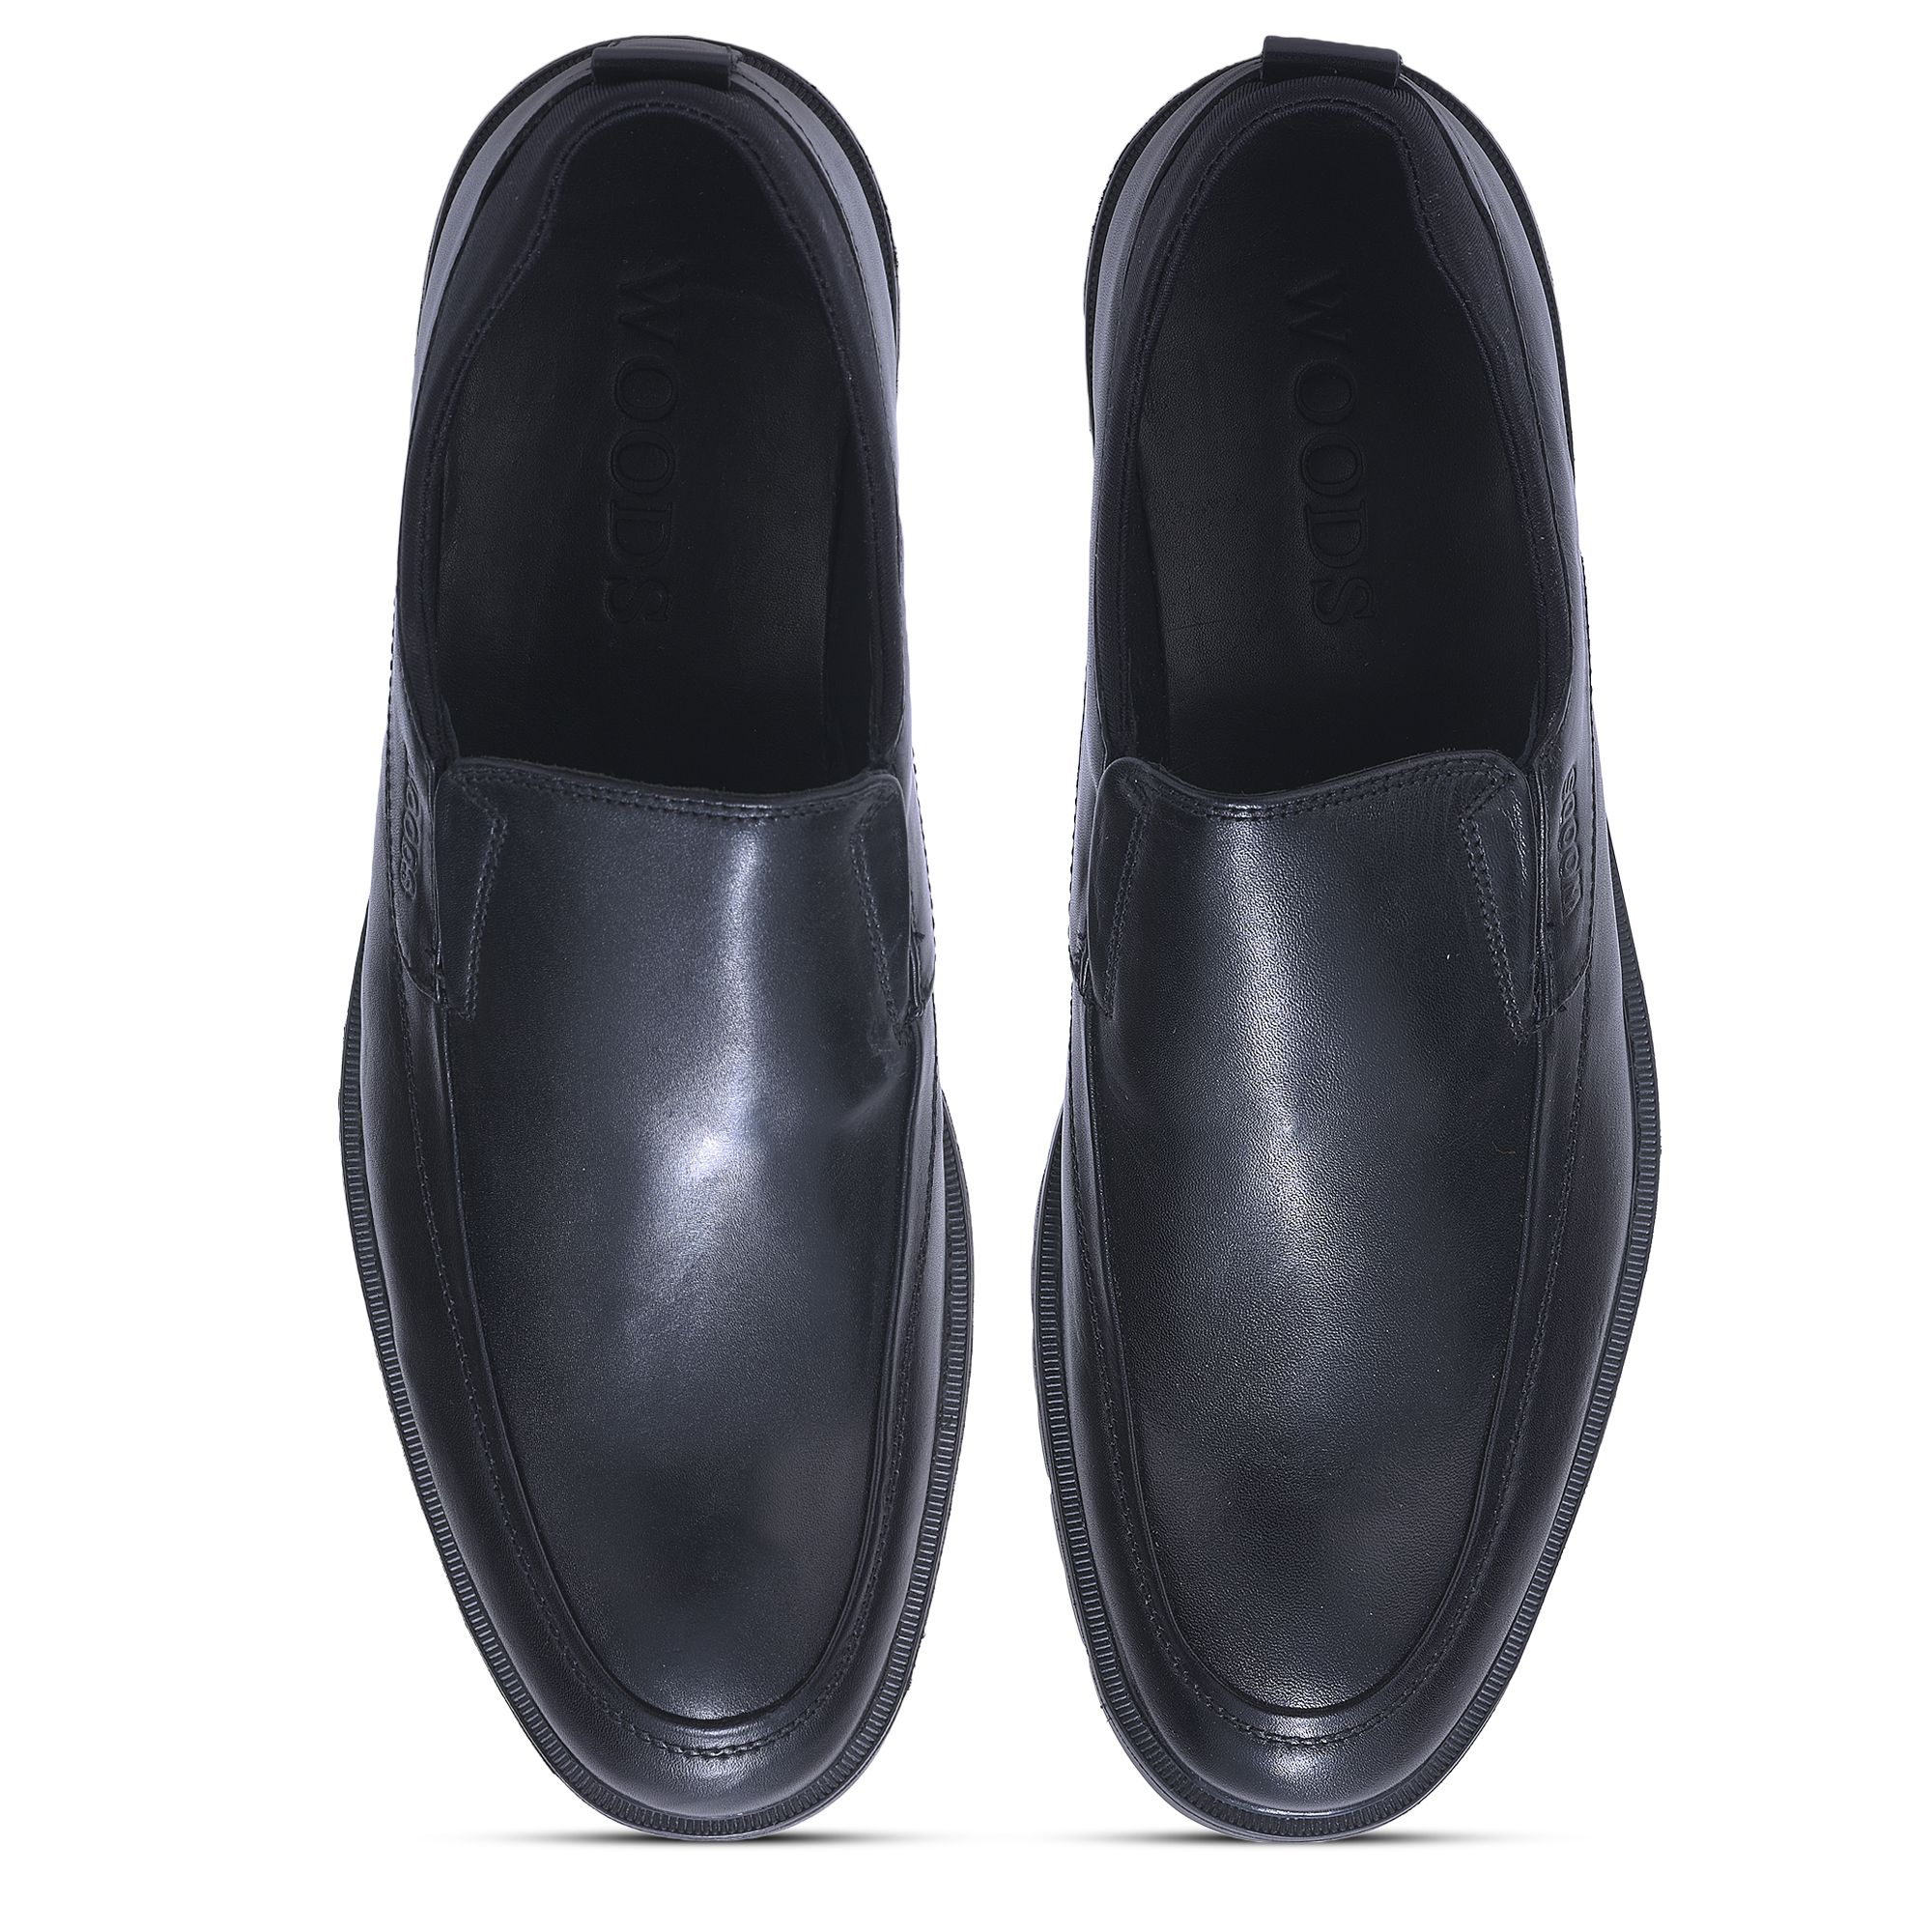 BLACK slip-on shoes